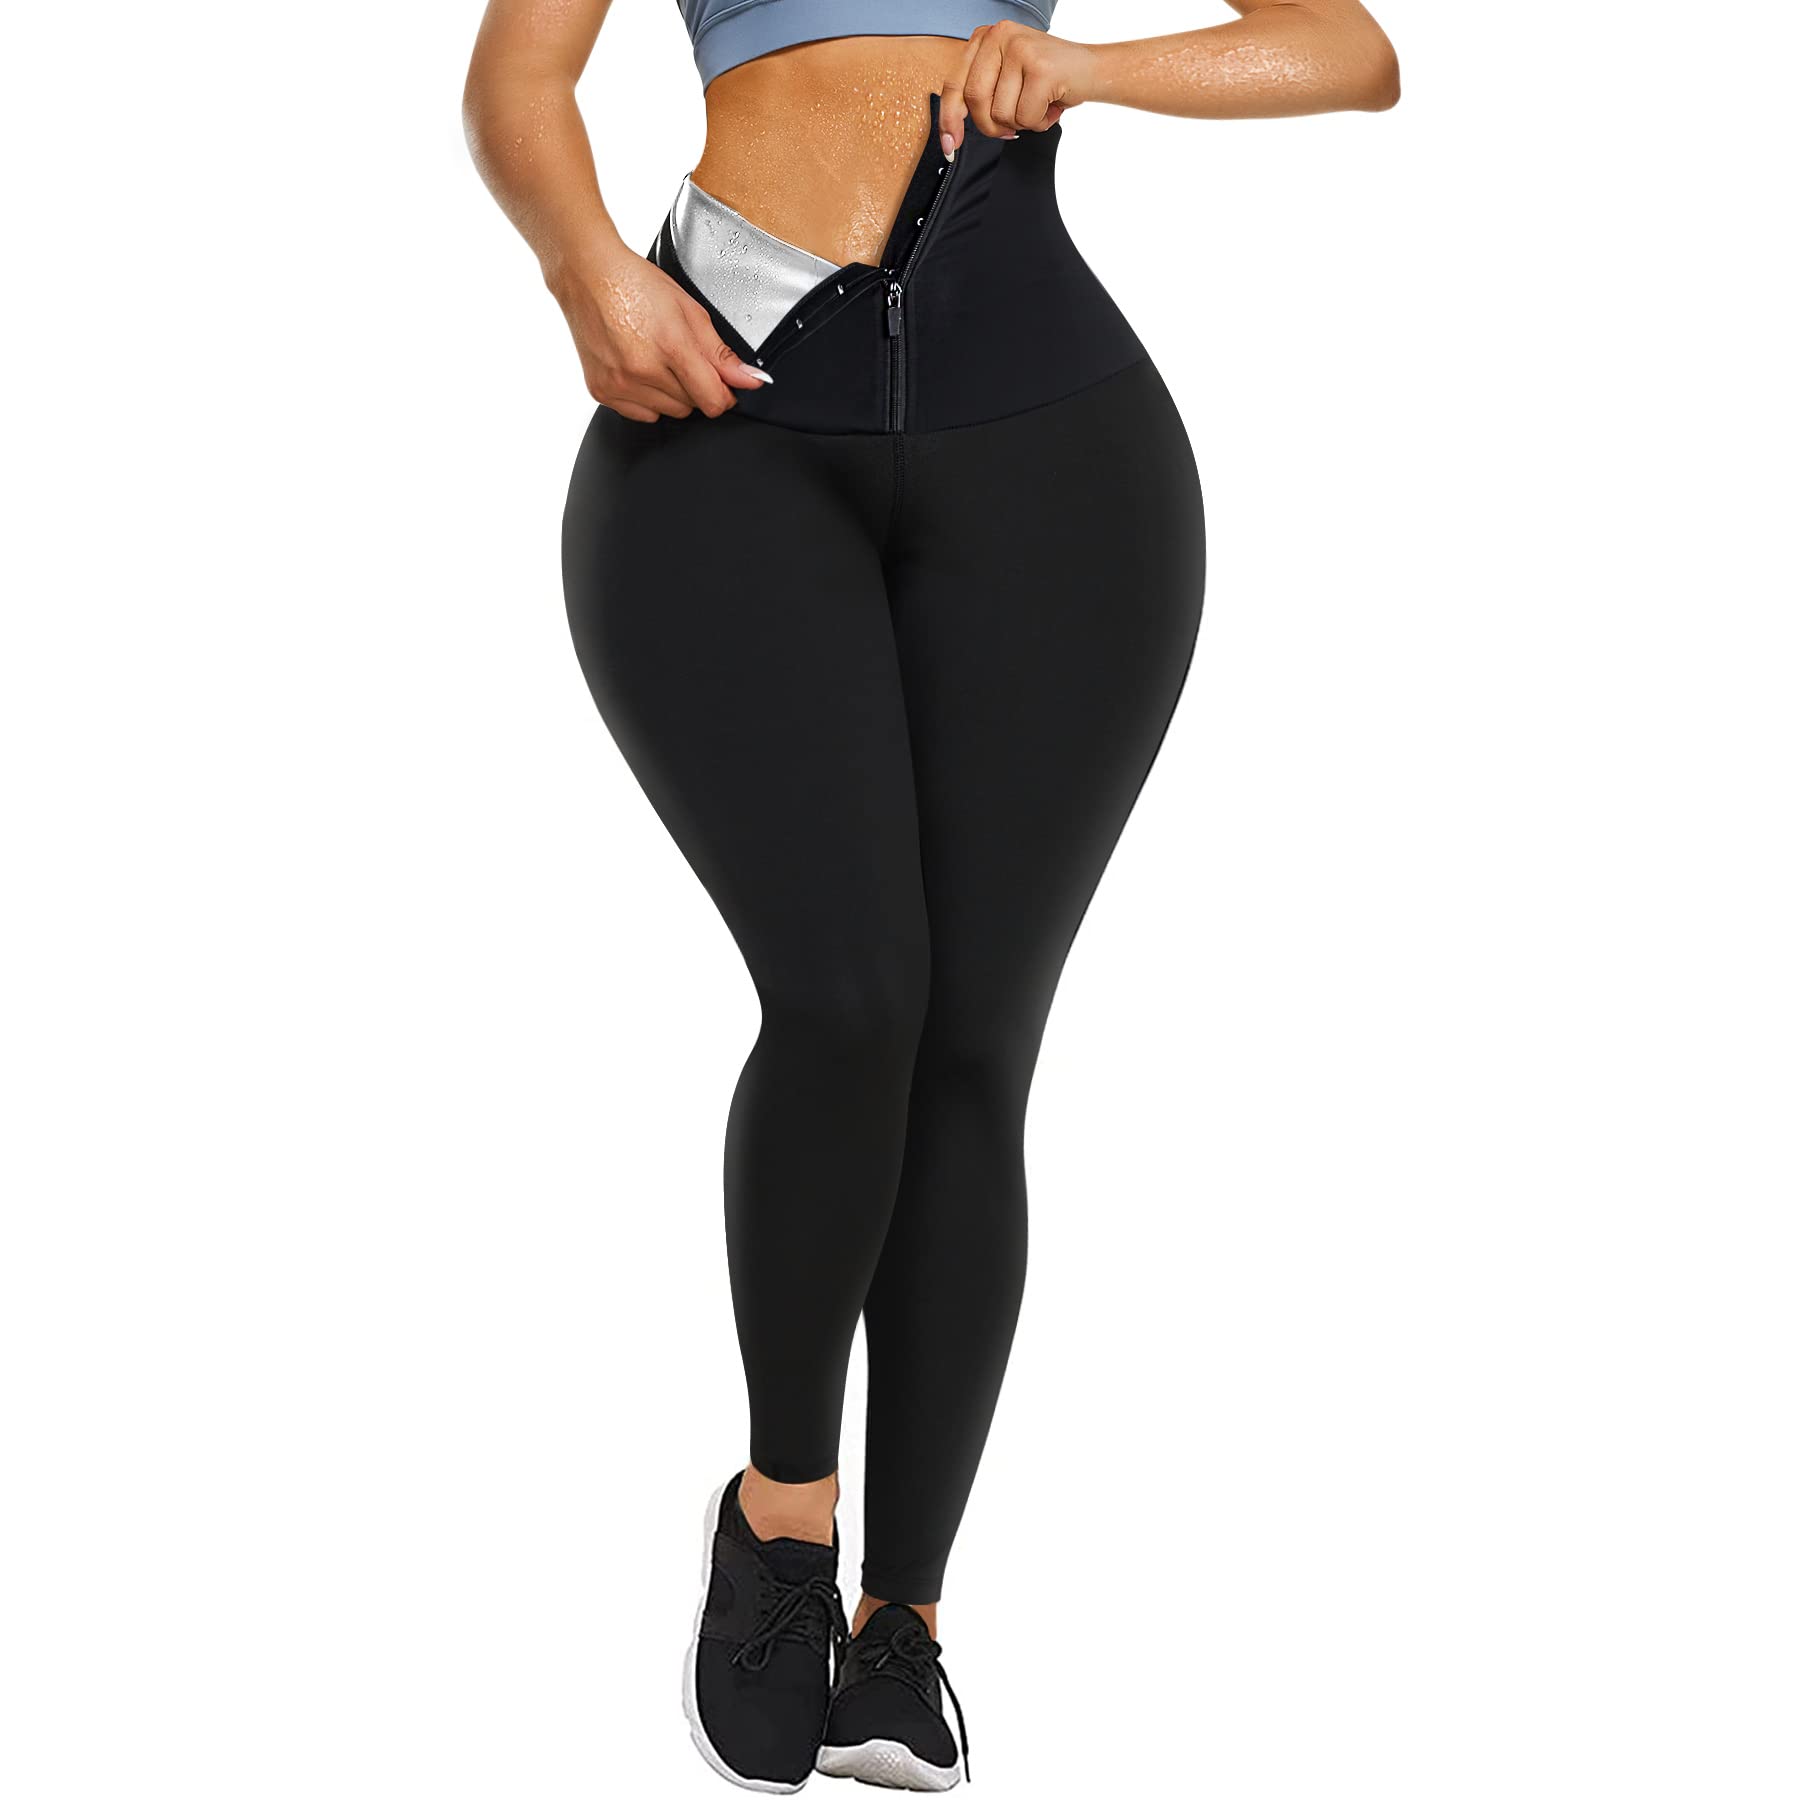 Fashion Sauna Pants Shorts Women Weight Loss Sweat Leggings Workout Body  Shaper Waist Trainer Leggings Slimming Pants With On